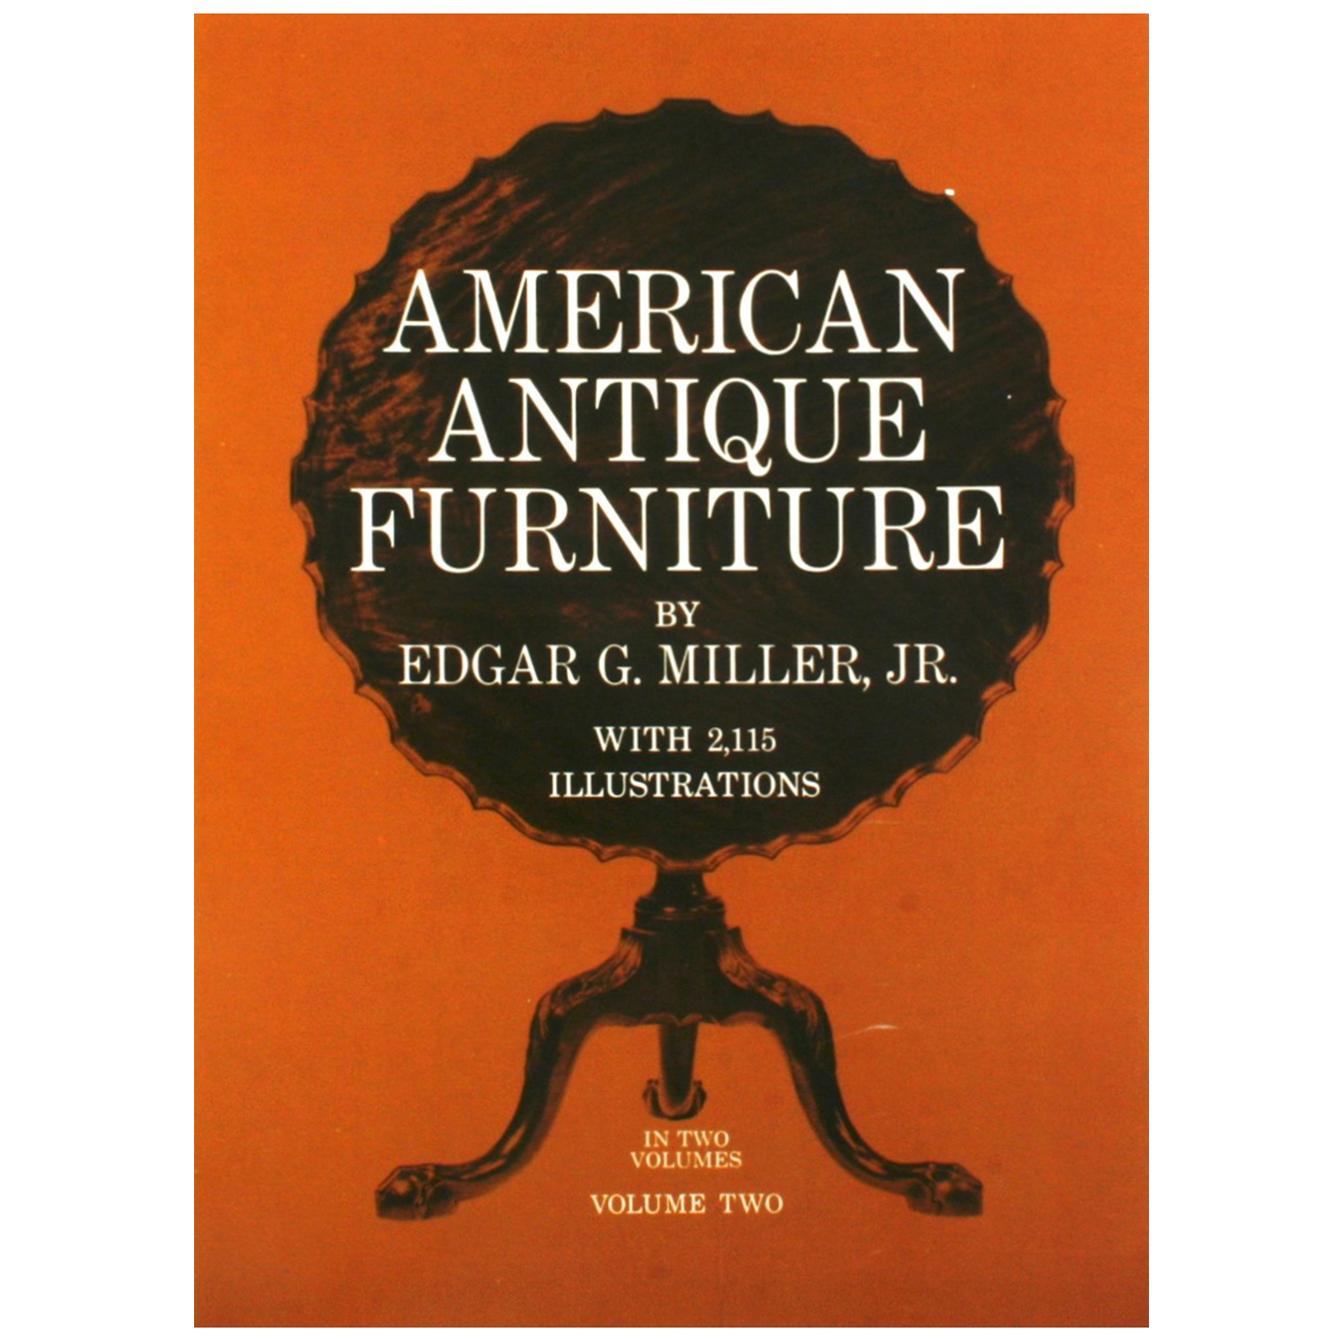 American Antique Furniture by Edgar G. Miller, Jr.